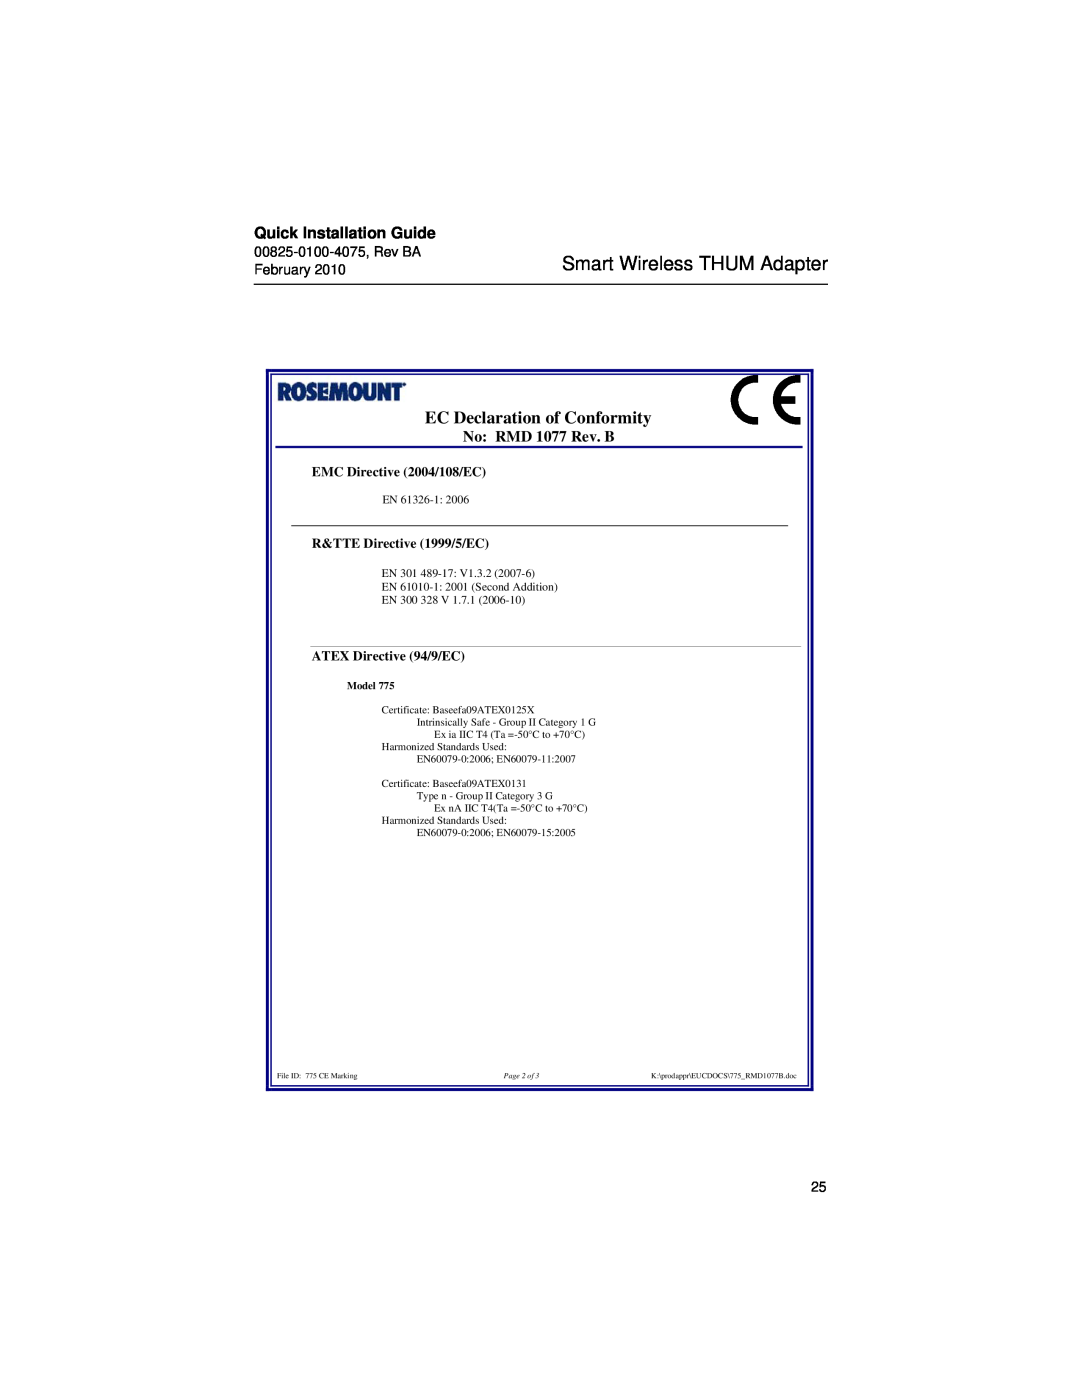 Emerson 00825-0100-4075 EC Declaration of Conformity, Smart Wireless THUM Adapter, Quick Installation Guide, En, EN 300 